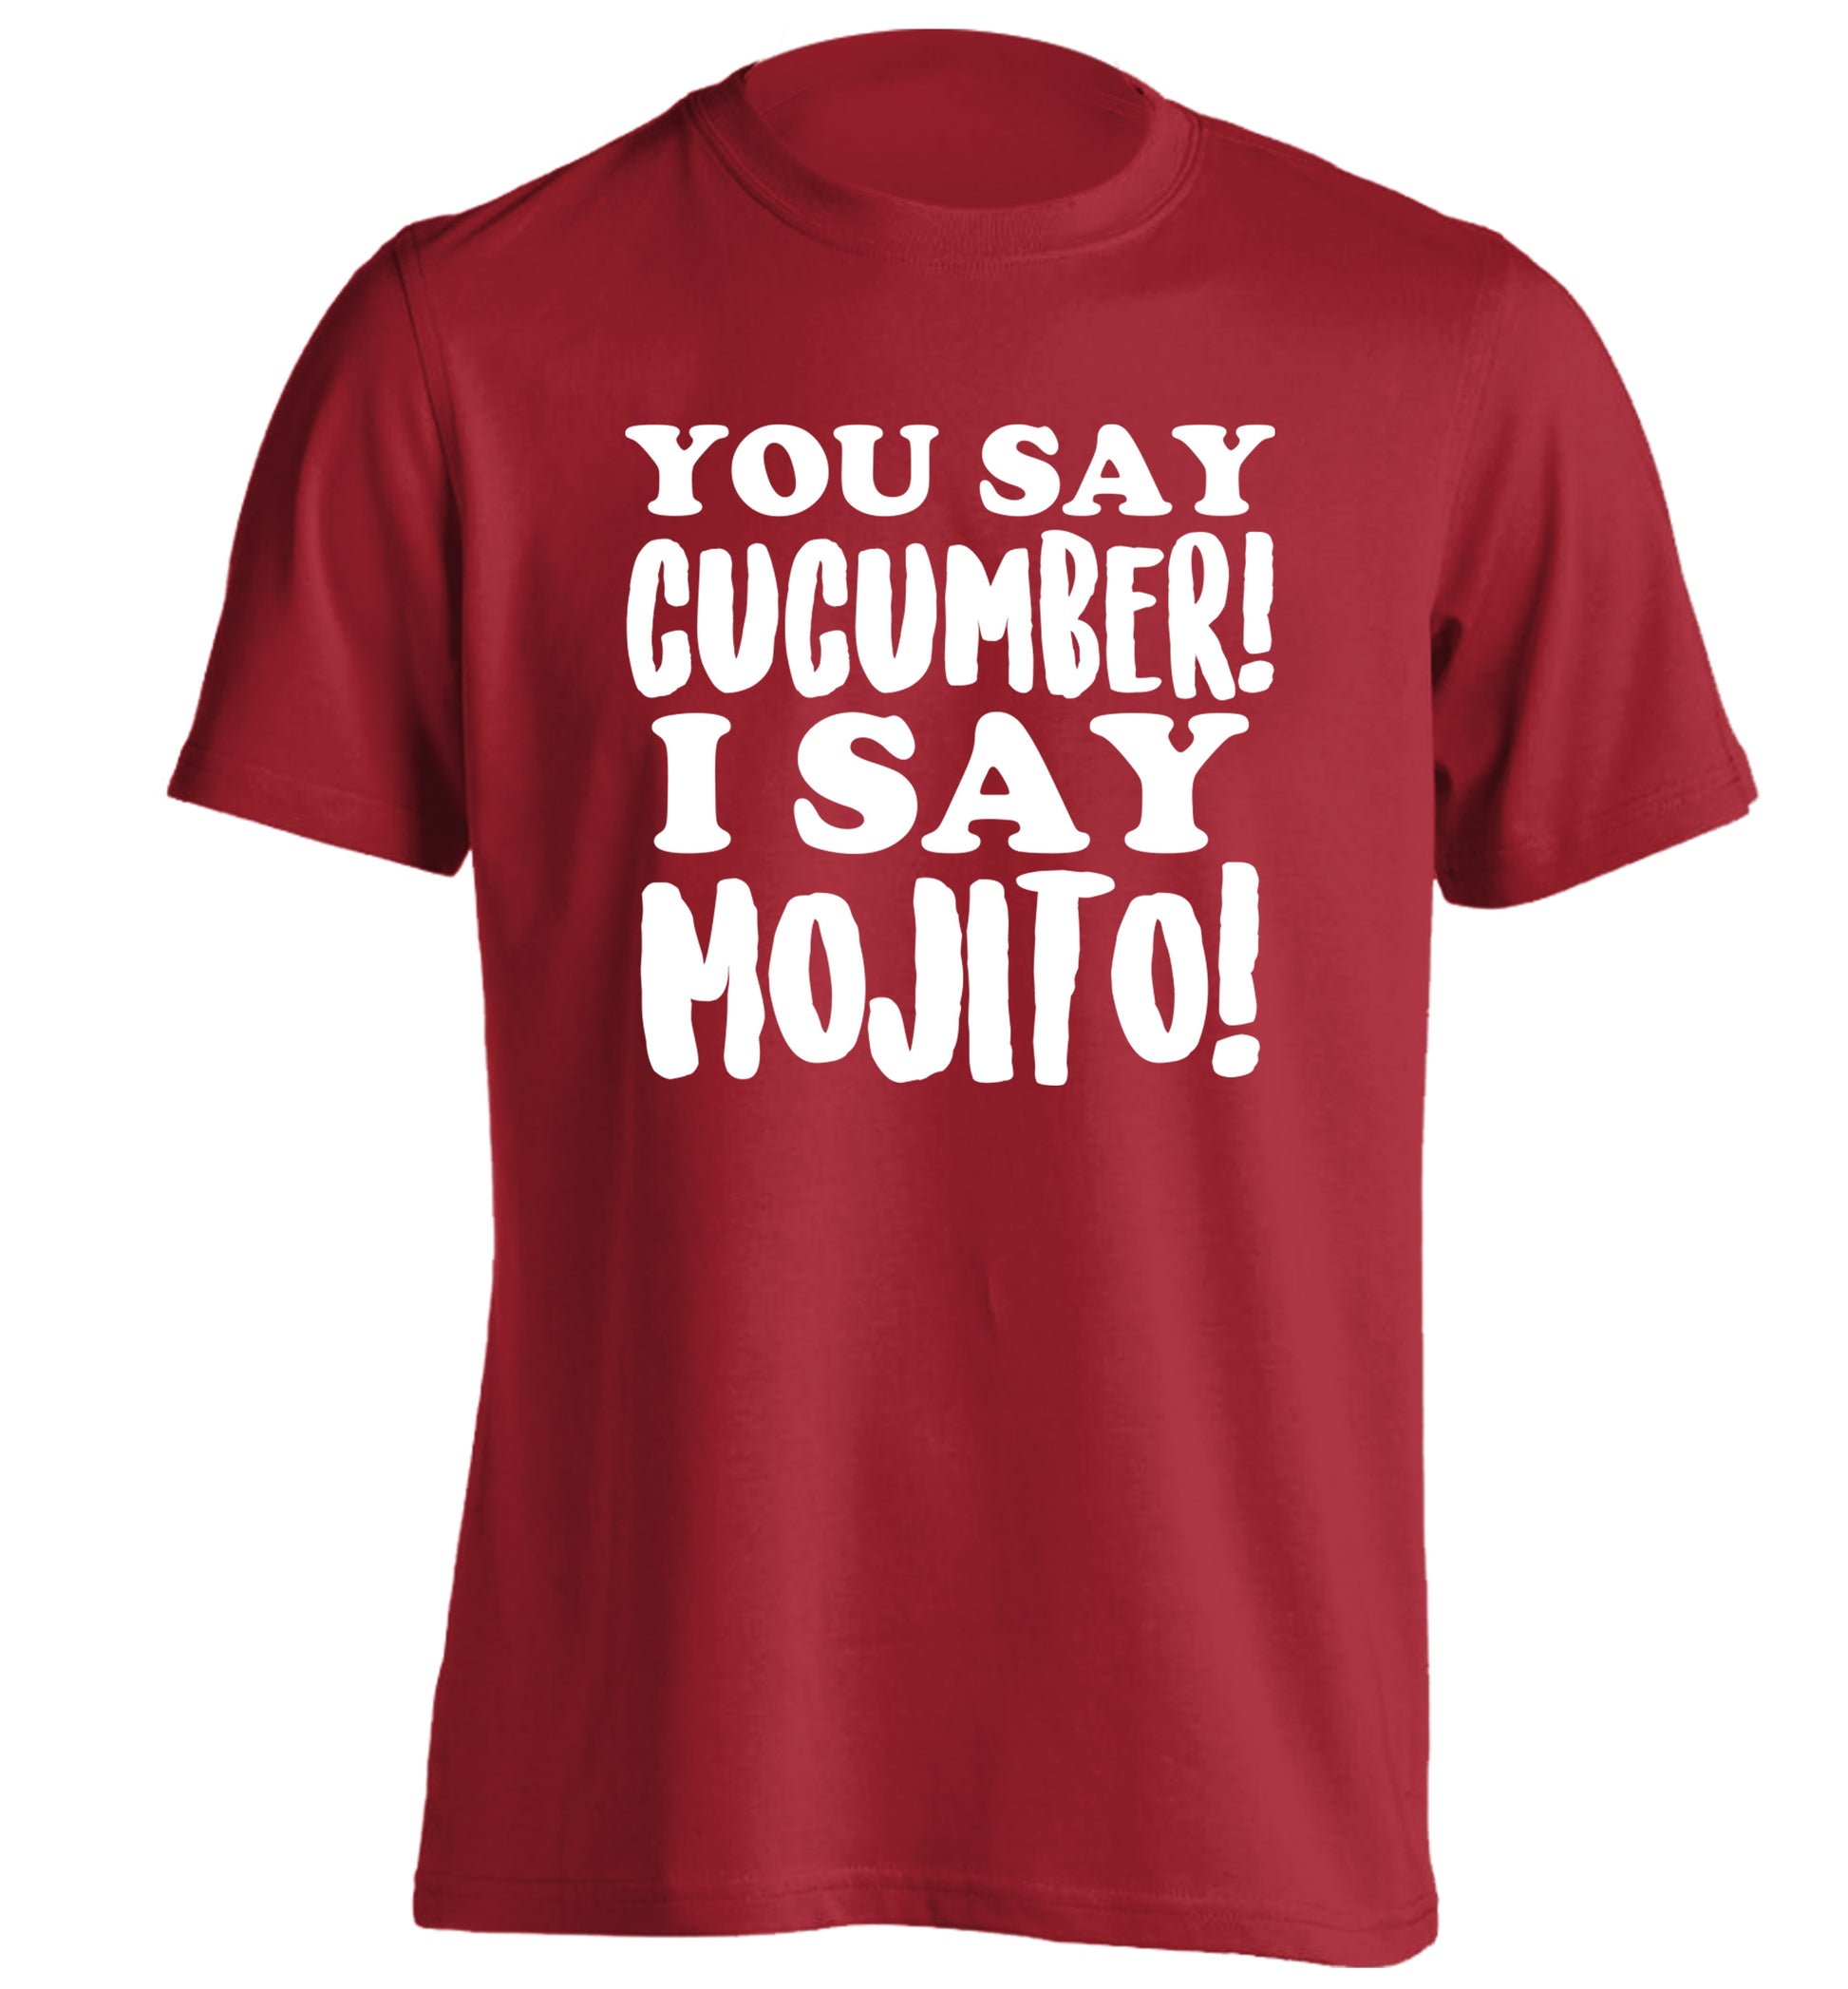 You say cucumber I say mojito! adults unisex red Tshirt 2XL